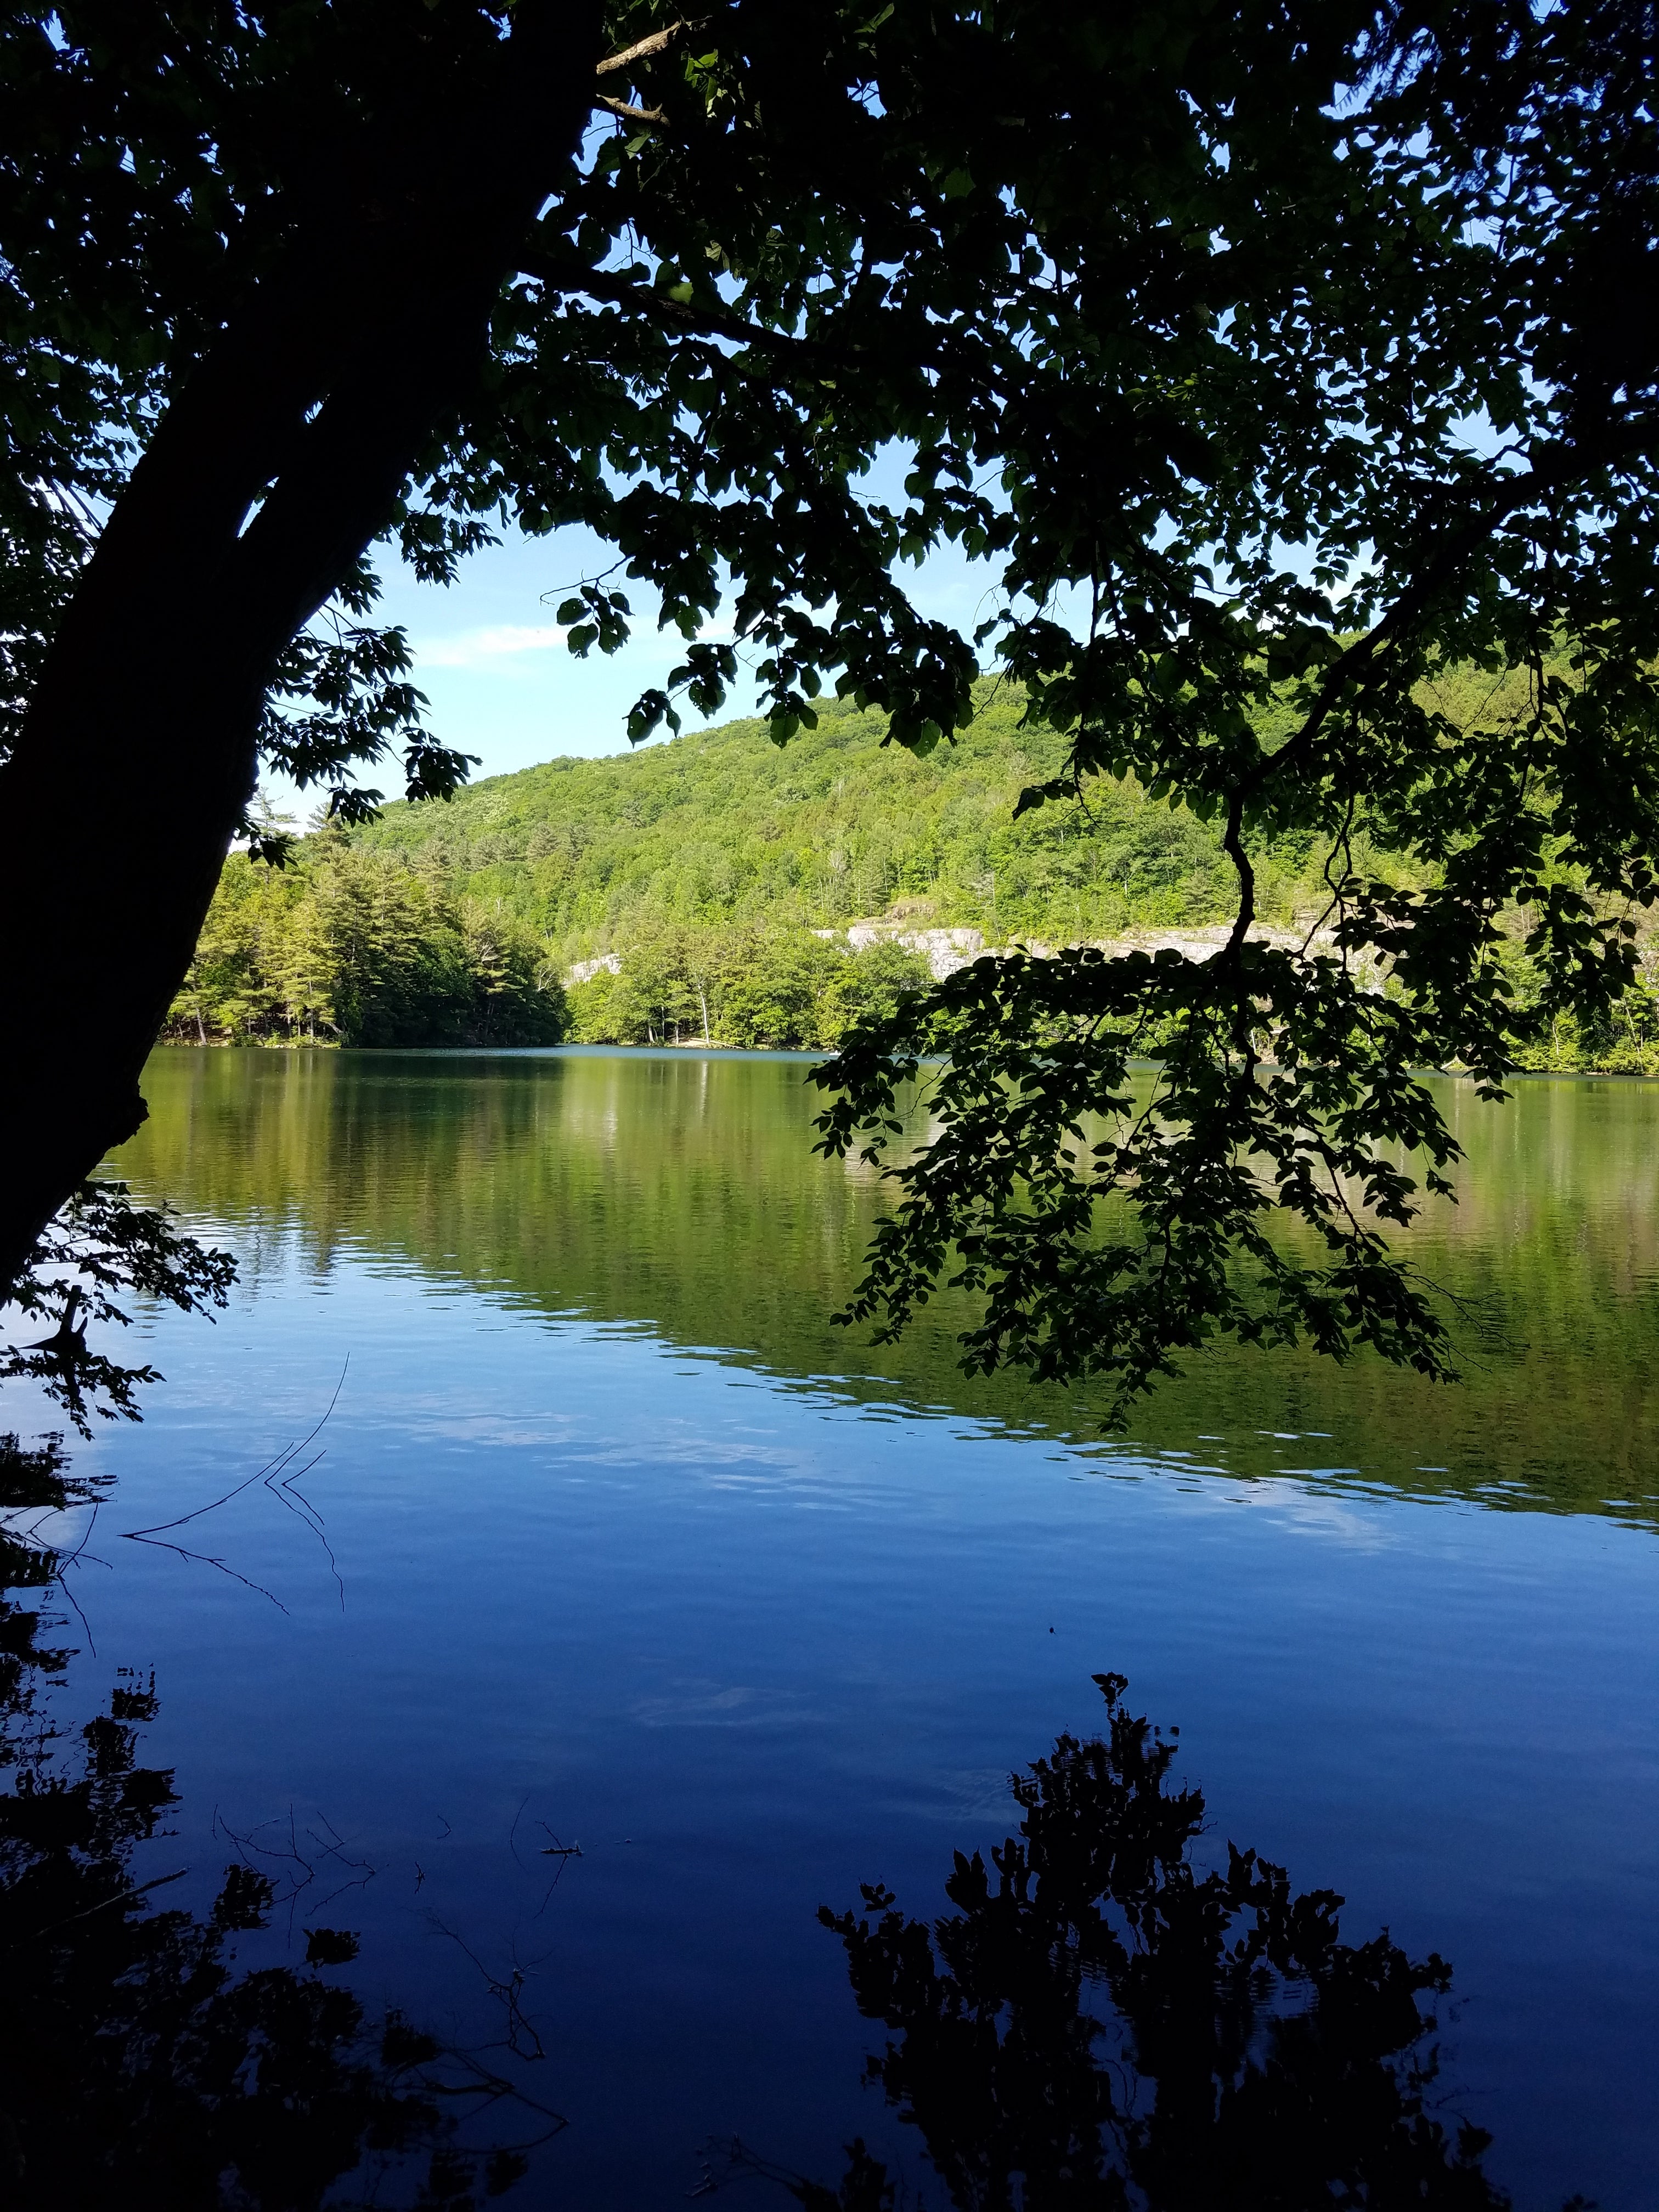 Very peaceful lake